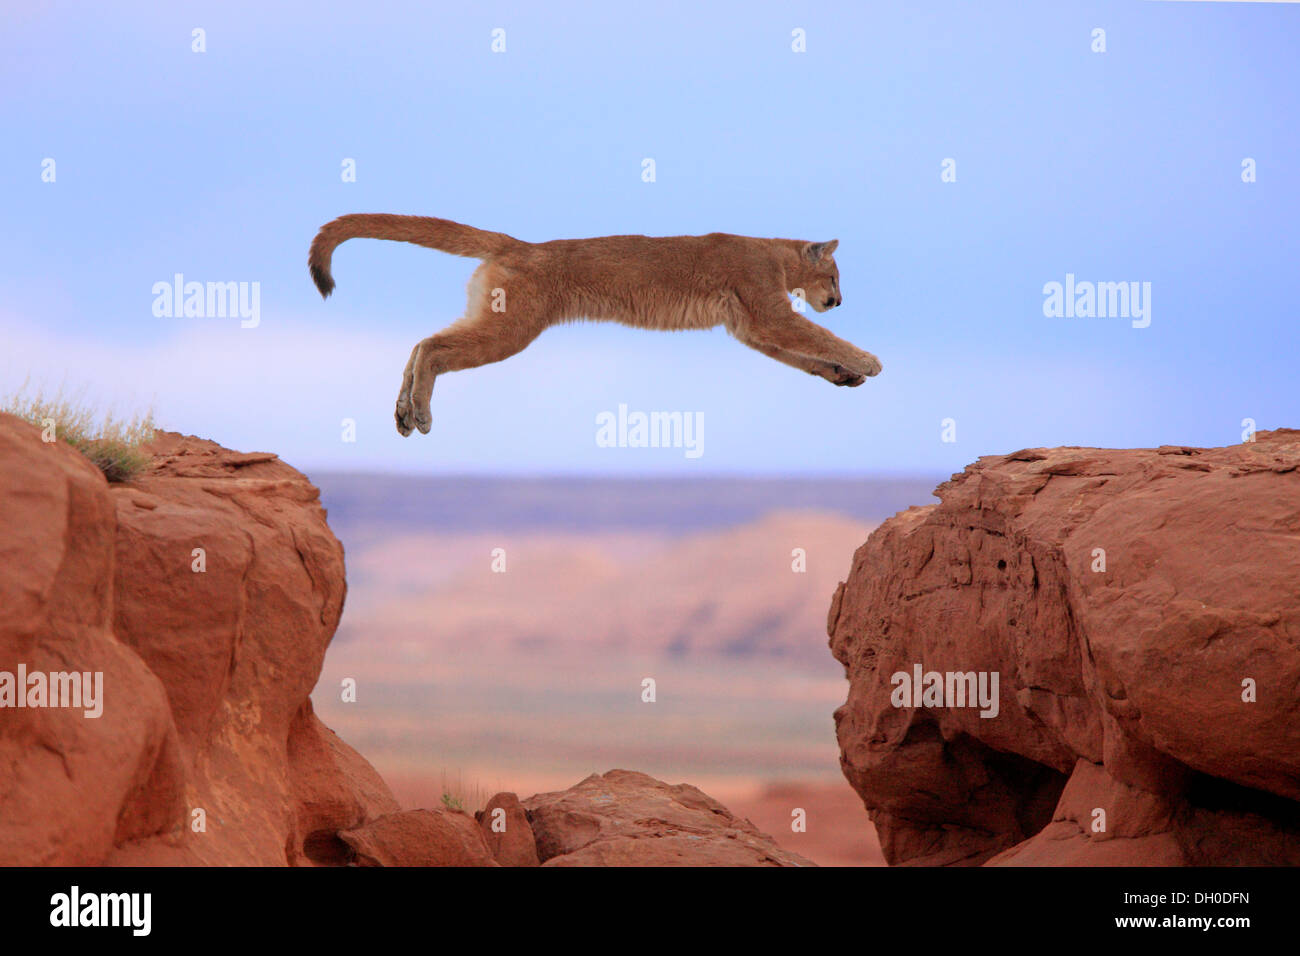 Cougar, Puma or Mountain Lion (Puma concolor), adult, jumping, captive, Monument Valley, Colorado Plateau, Utah, United States Stock Photo